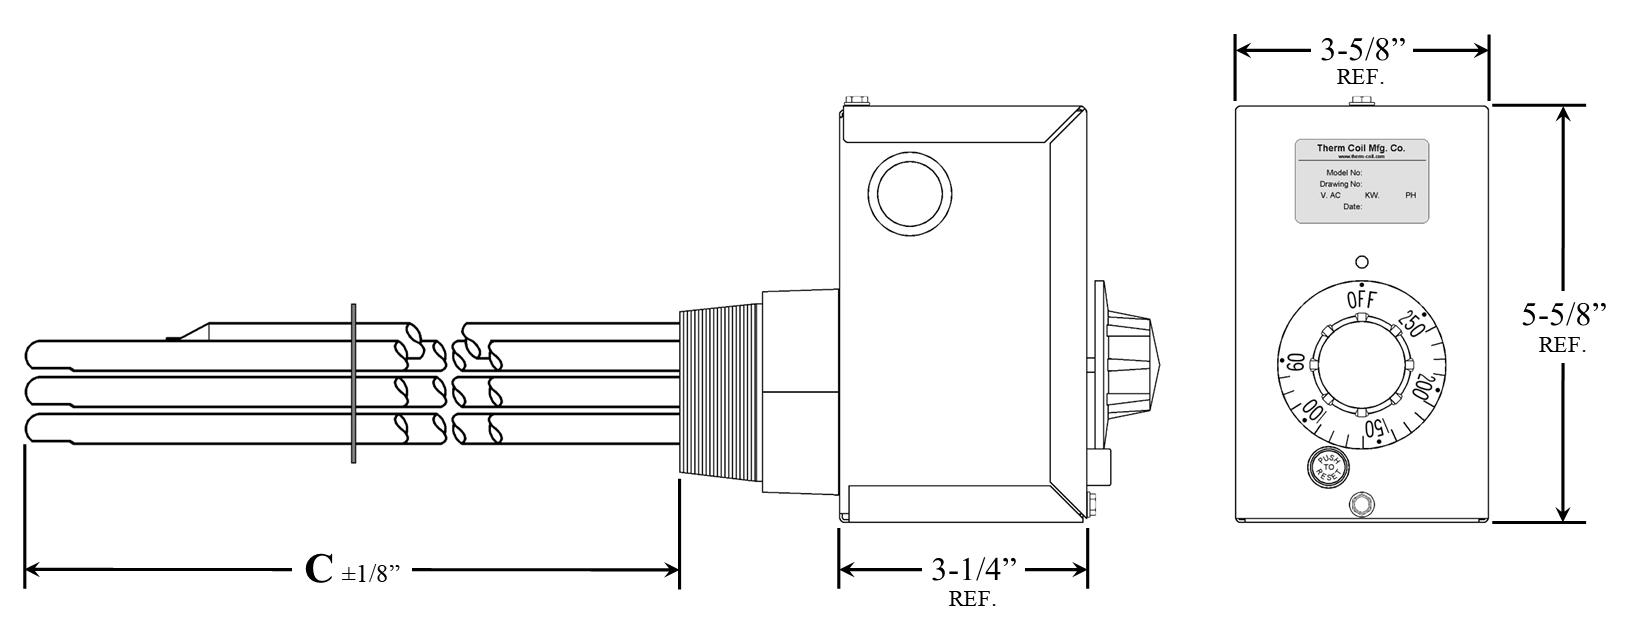 HA-10053 Model: 10000W @ 480V 3-Phase, 20" Immersion Length Regulated 2" NPT Commercial Dishwasher Heating Elements